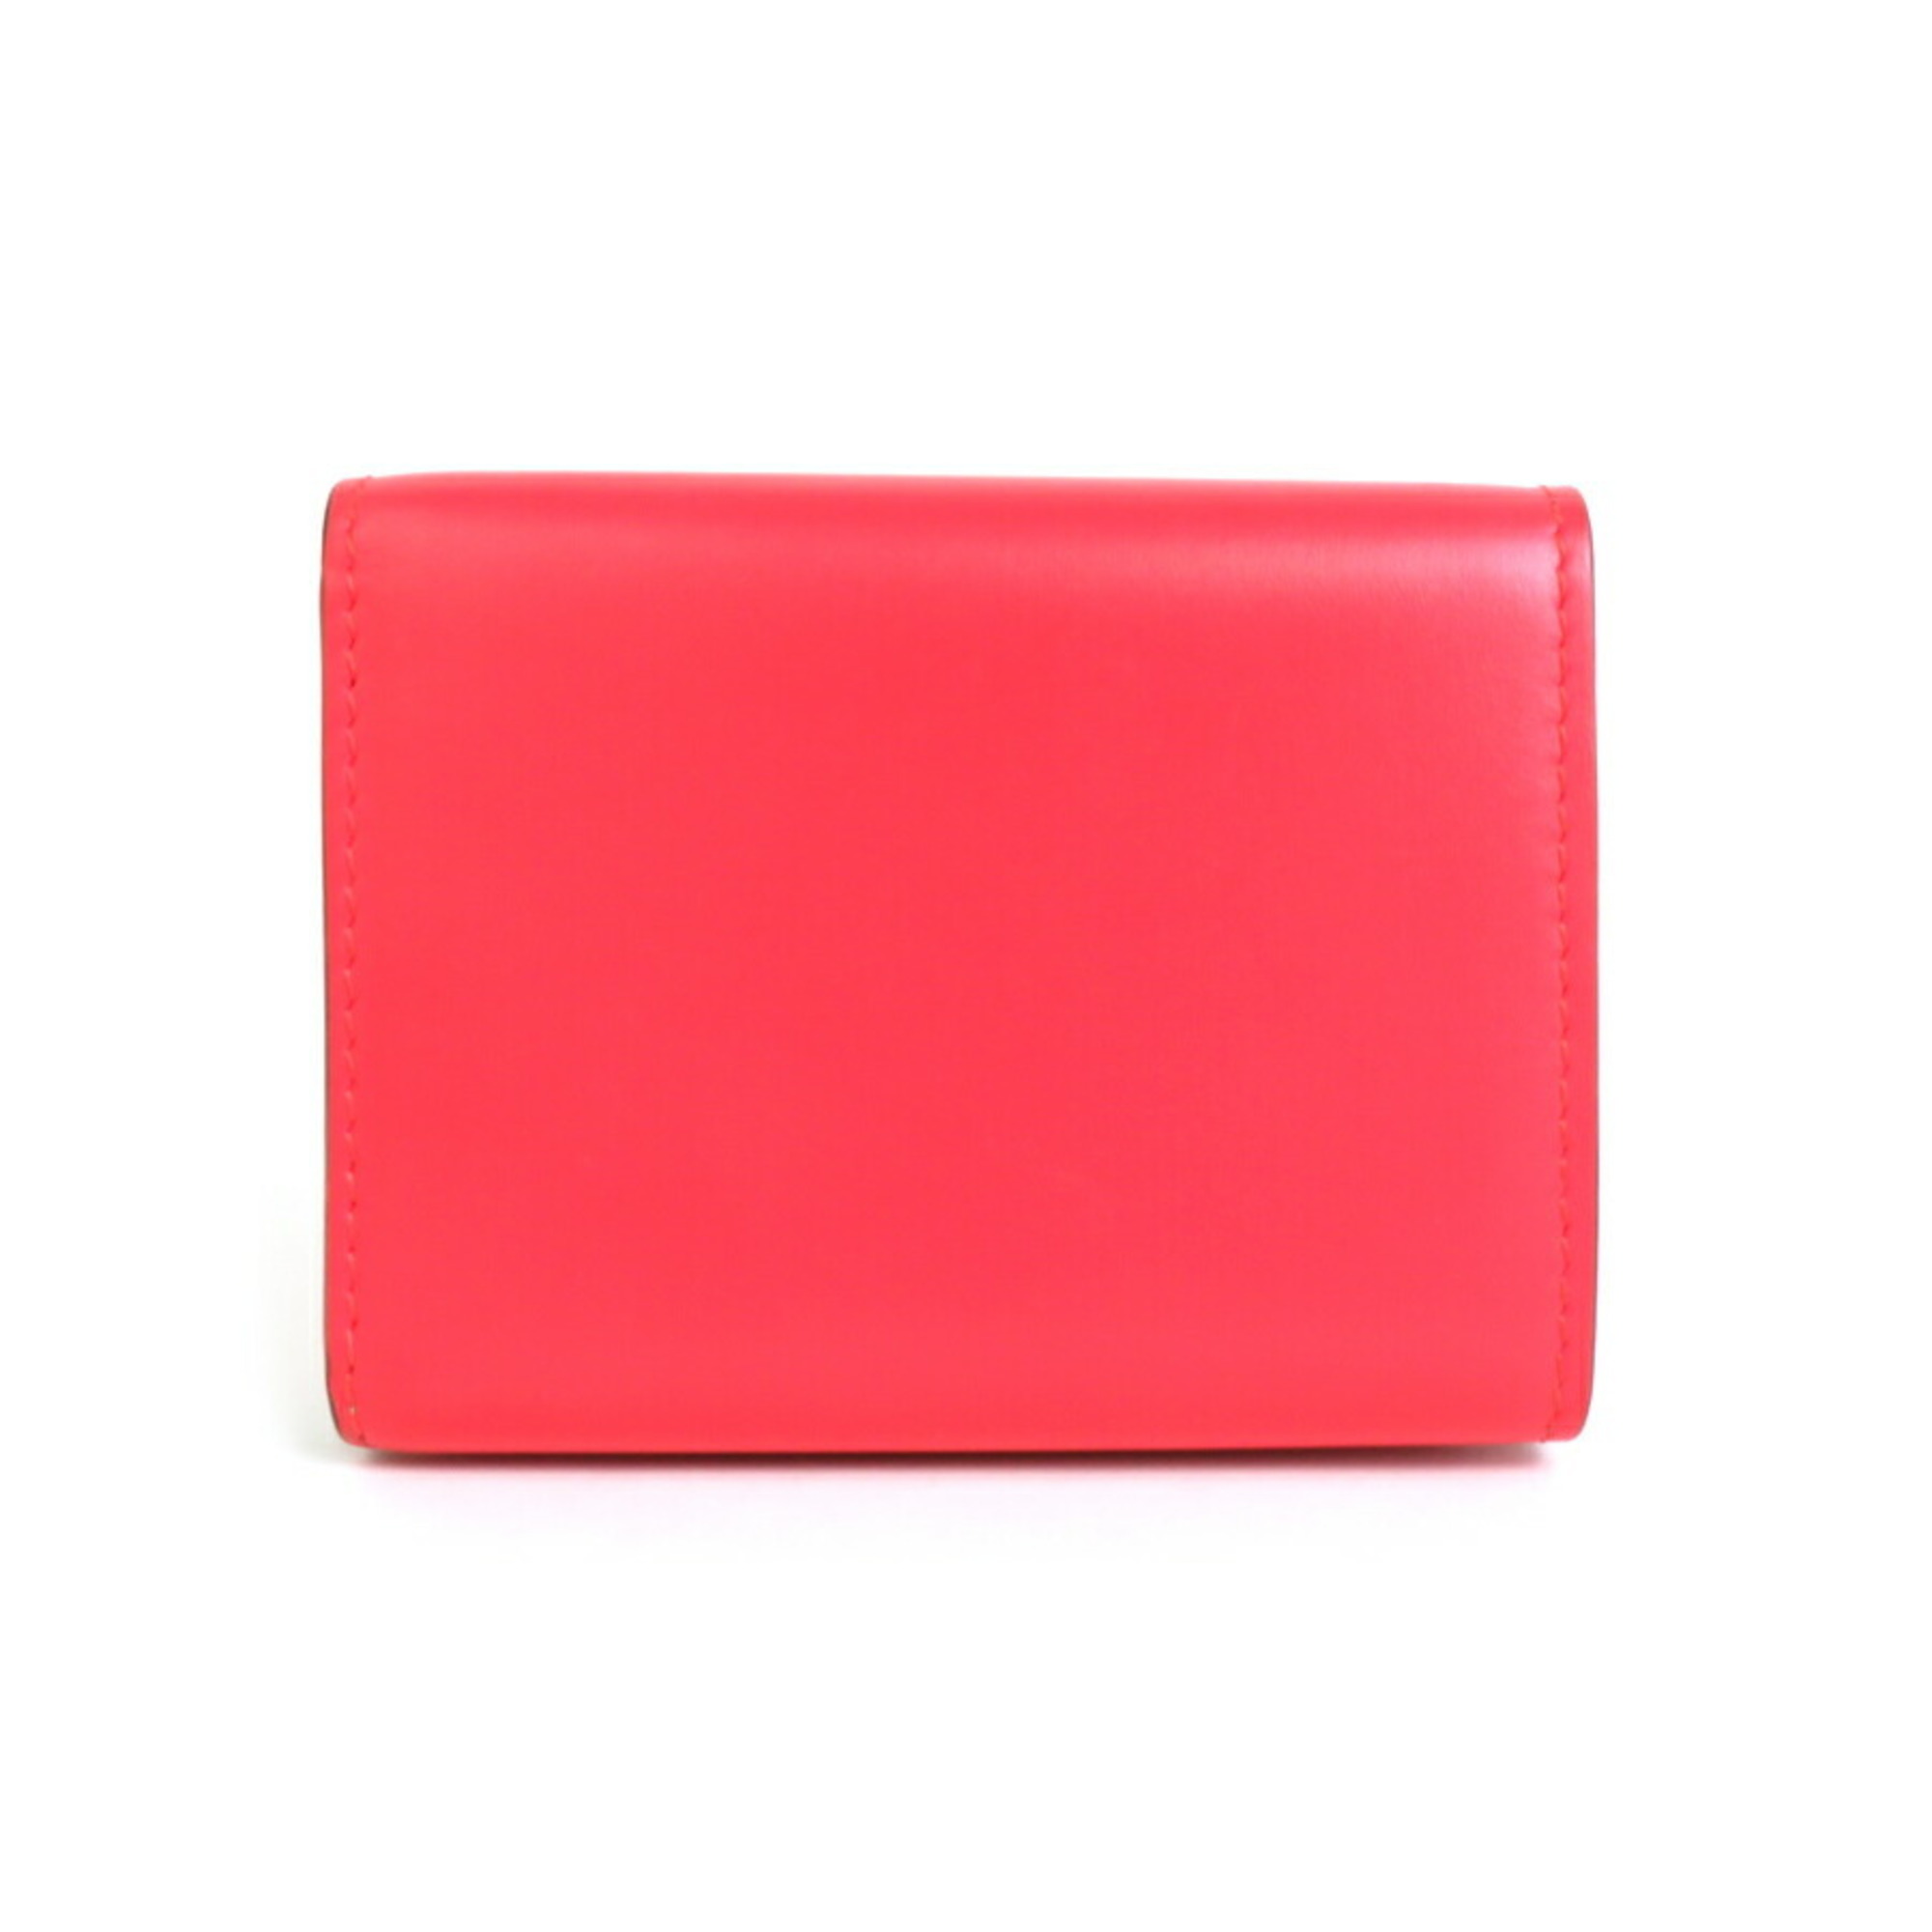 FENDI Bifold Wallet Leather Red x Beige Ladies 8M0480-ALWA